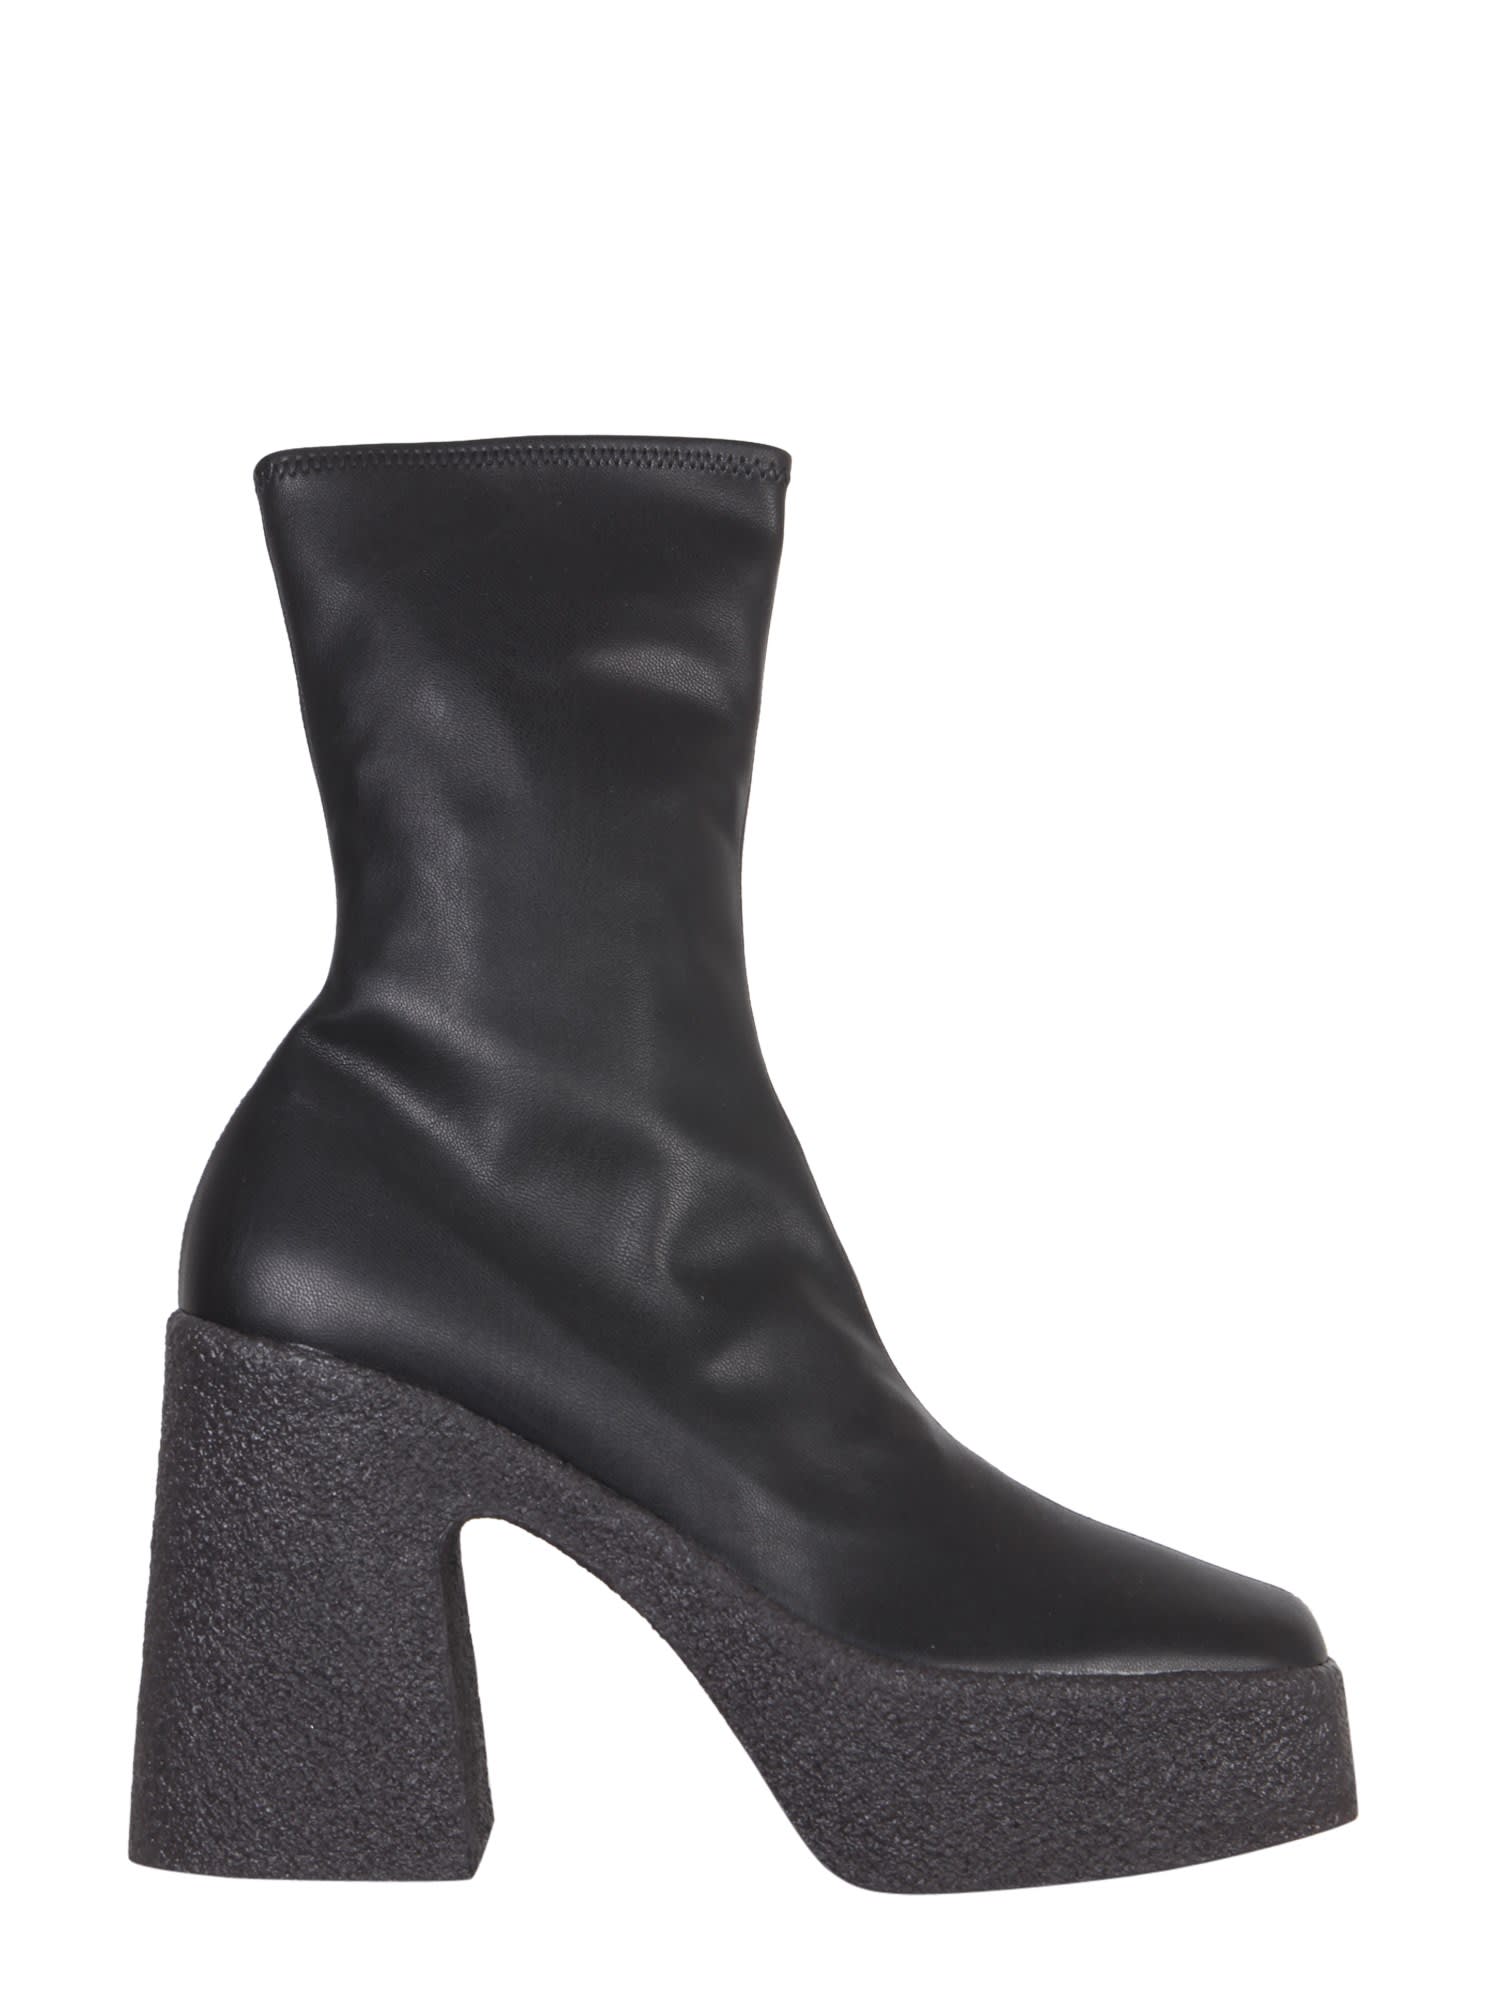 Buy Stella McCartney Skyla Stretch Boots online, shop Stella McCartney shoes with free shipping